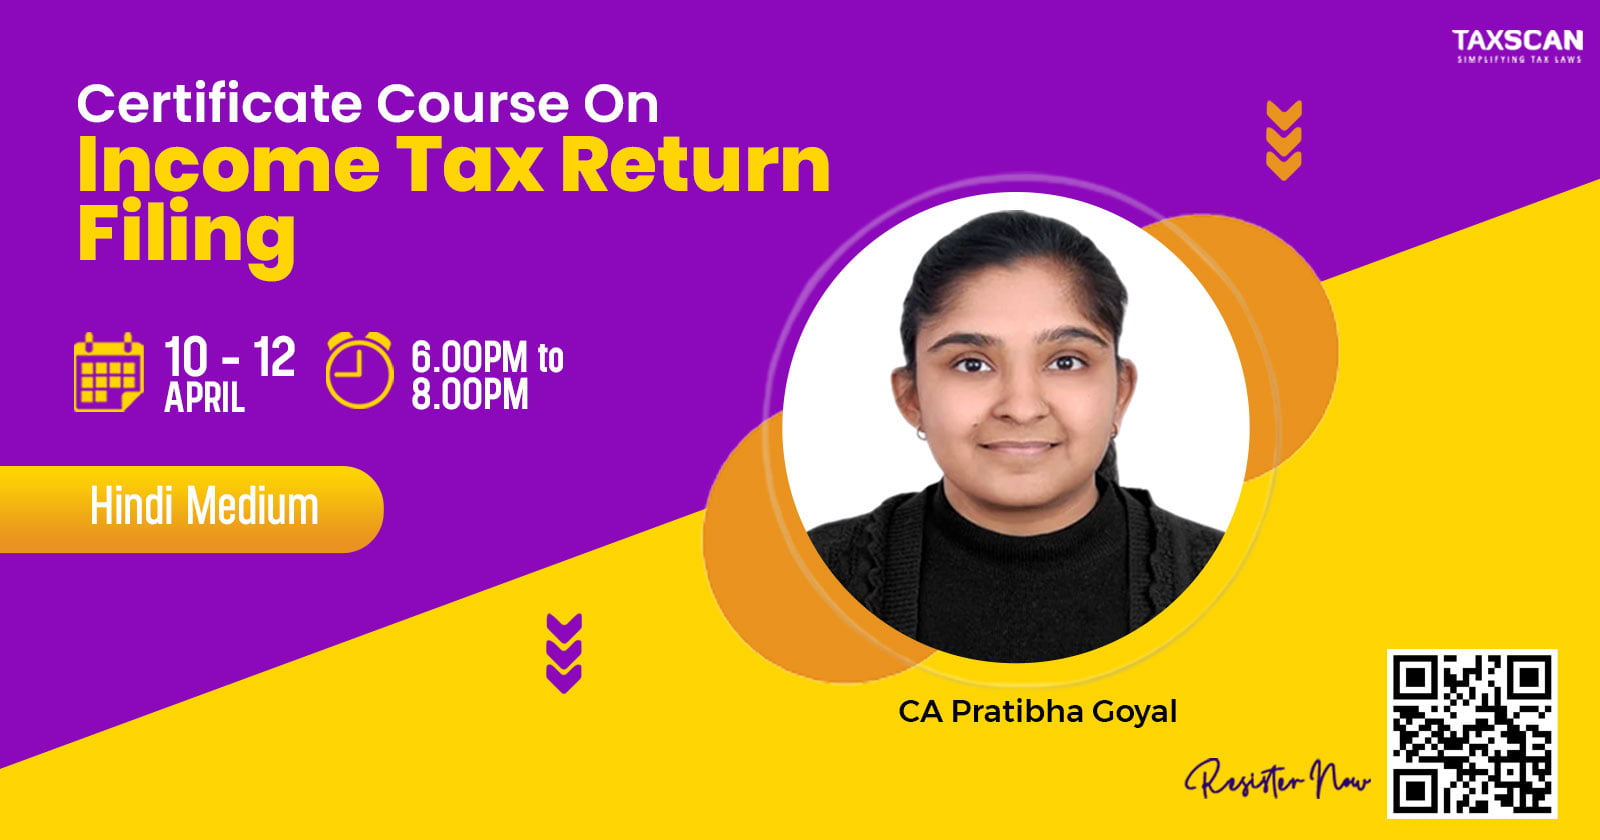 certificate course - income tax return filing - income tax return - income tax - tax - online certificate course - certificate course 2023 - taxscan - taxscan academy